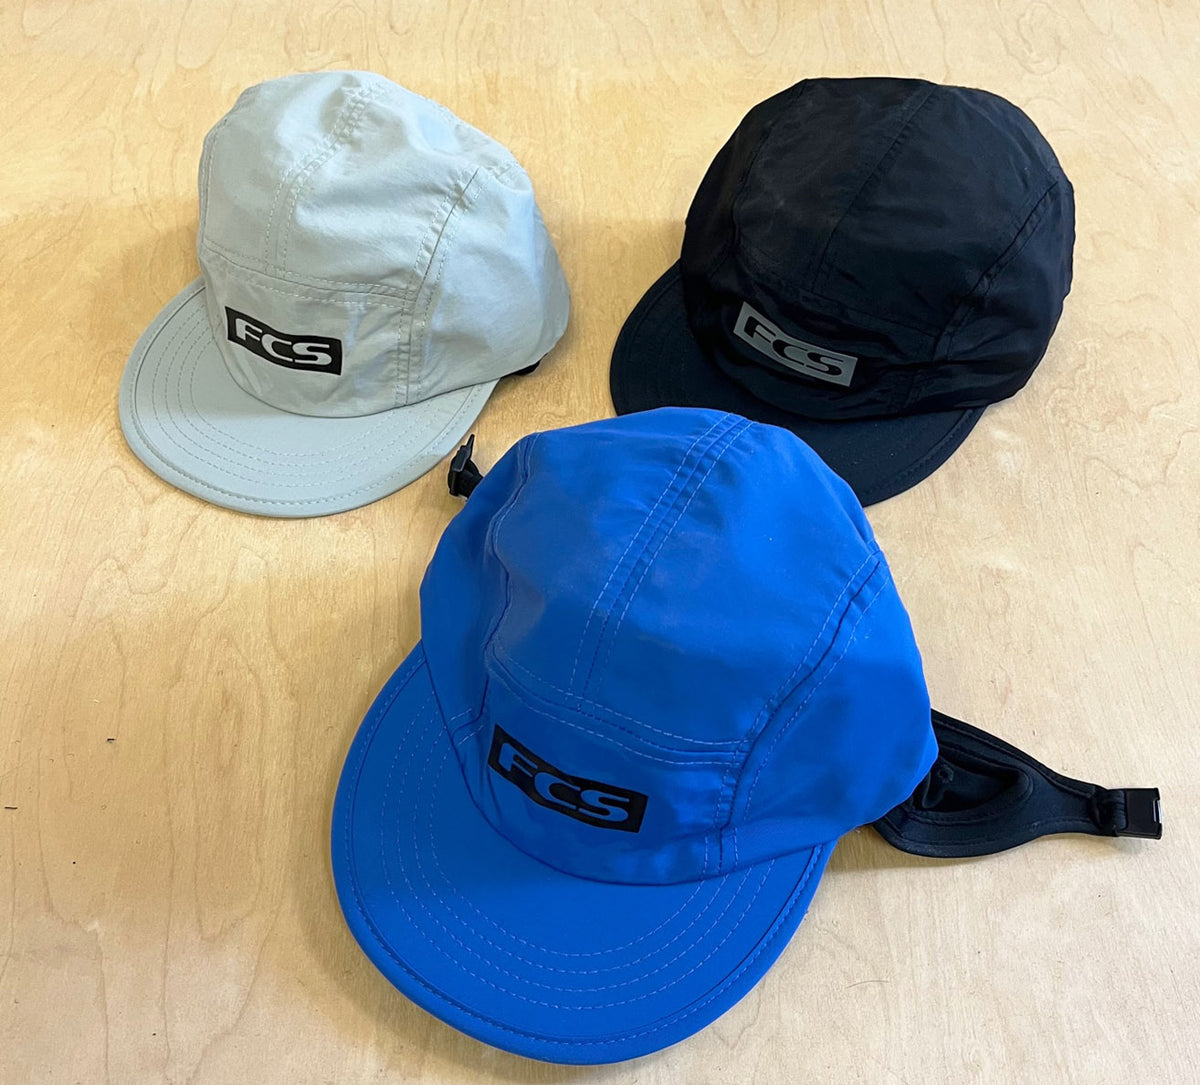 FCS ESSENTIAL SURF CAP - Caps - Wear - GONG Galaxy